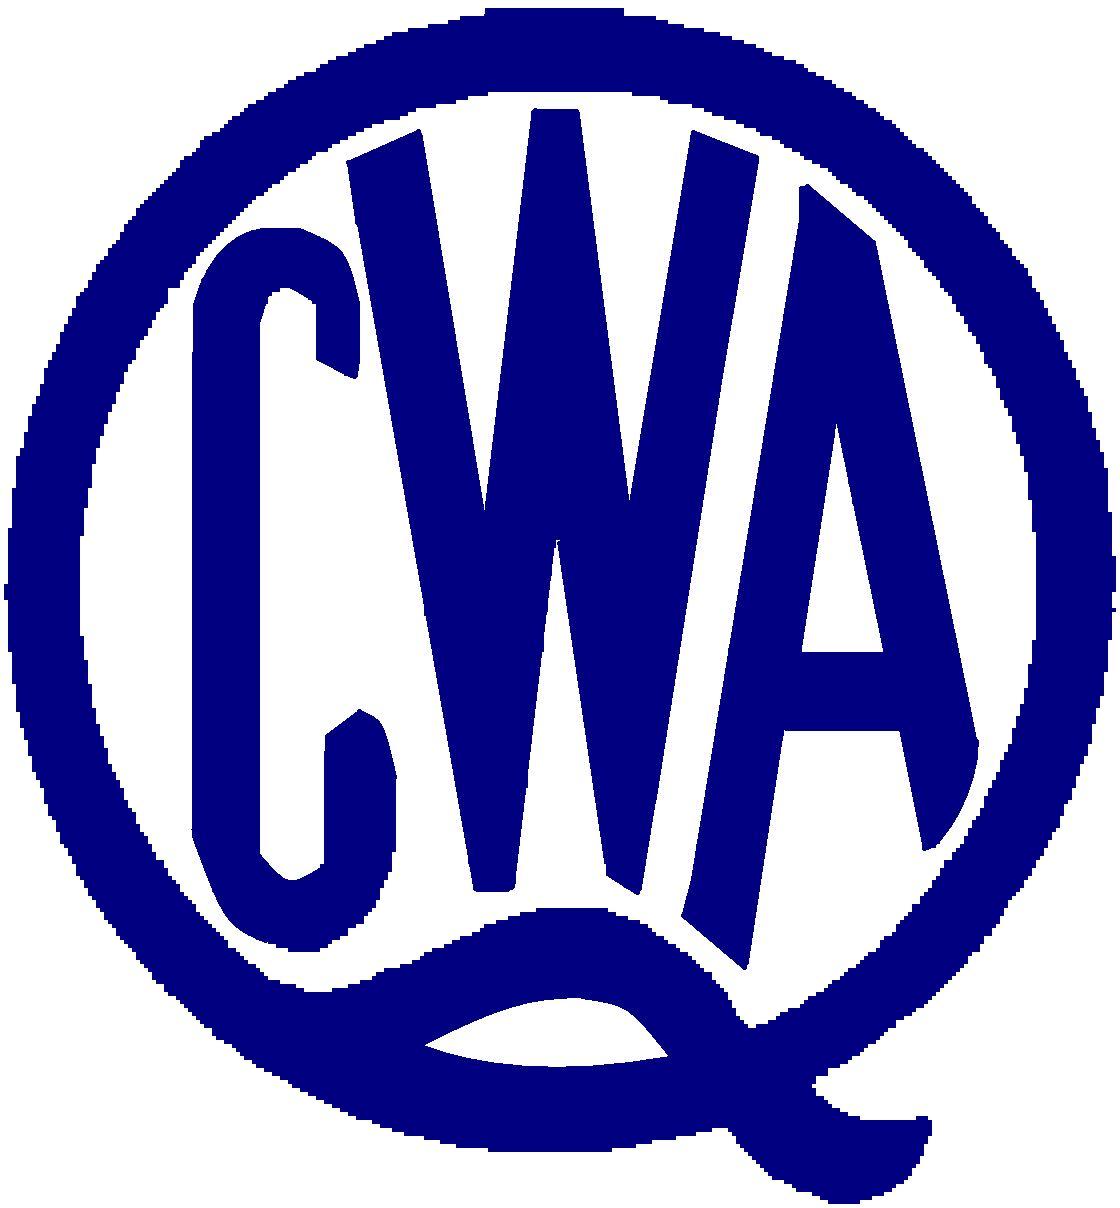 CWA Logo - Pin by CWA Recipes on CWA Badges & Logo's | Logos, Country women ...